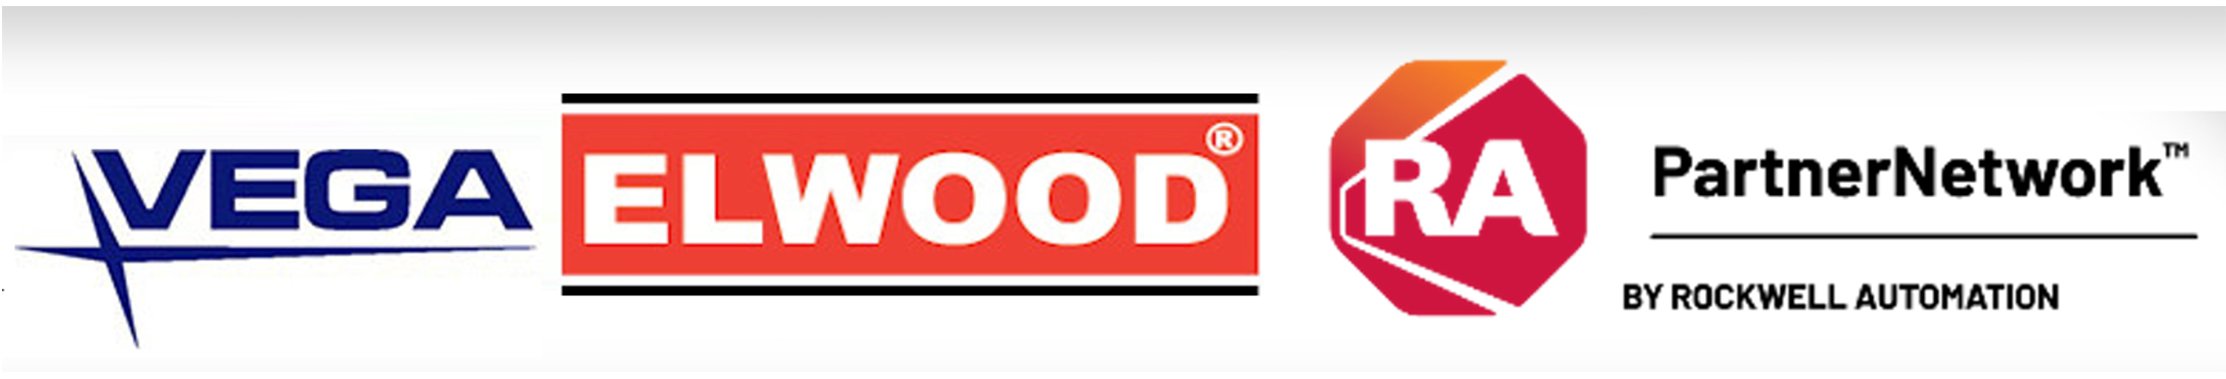 Elwood, Vega and Rockwell combined logos